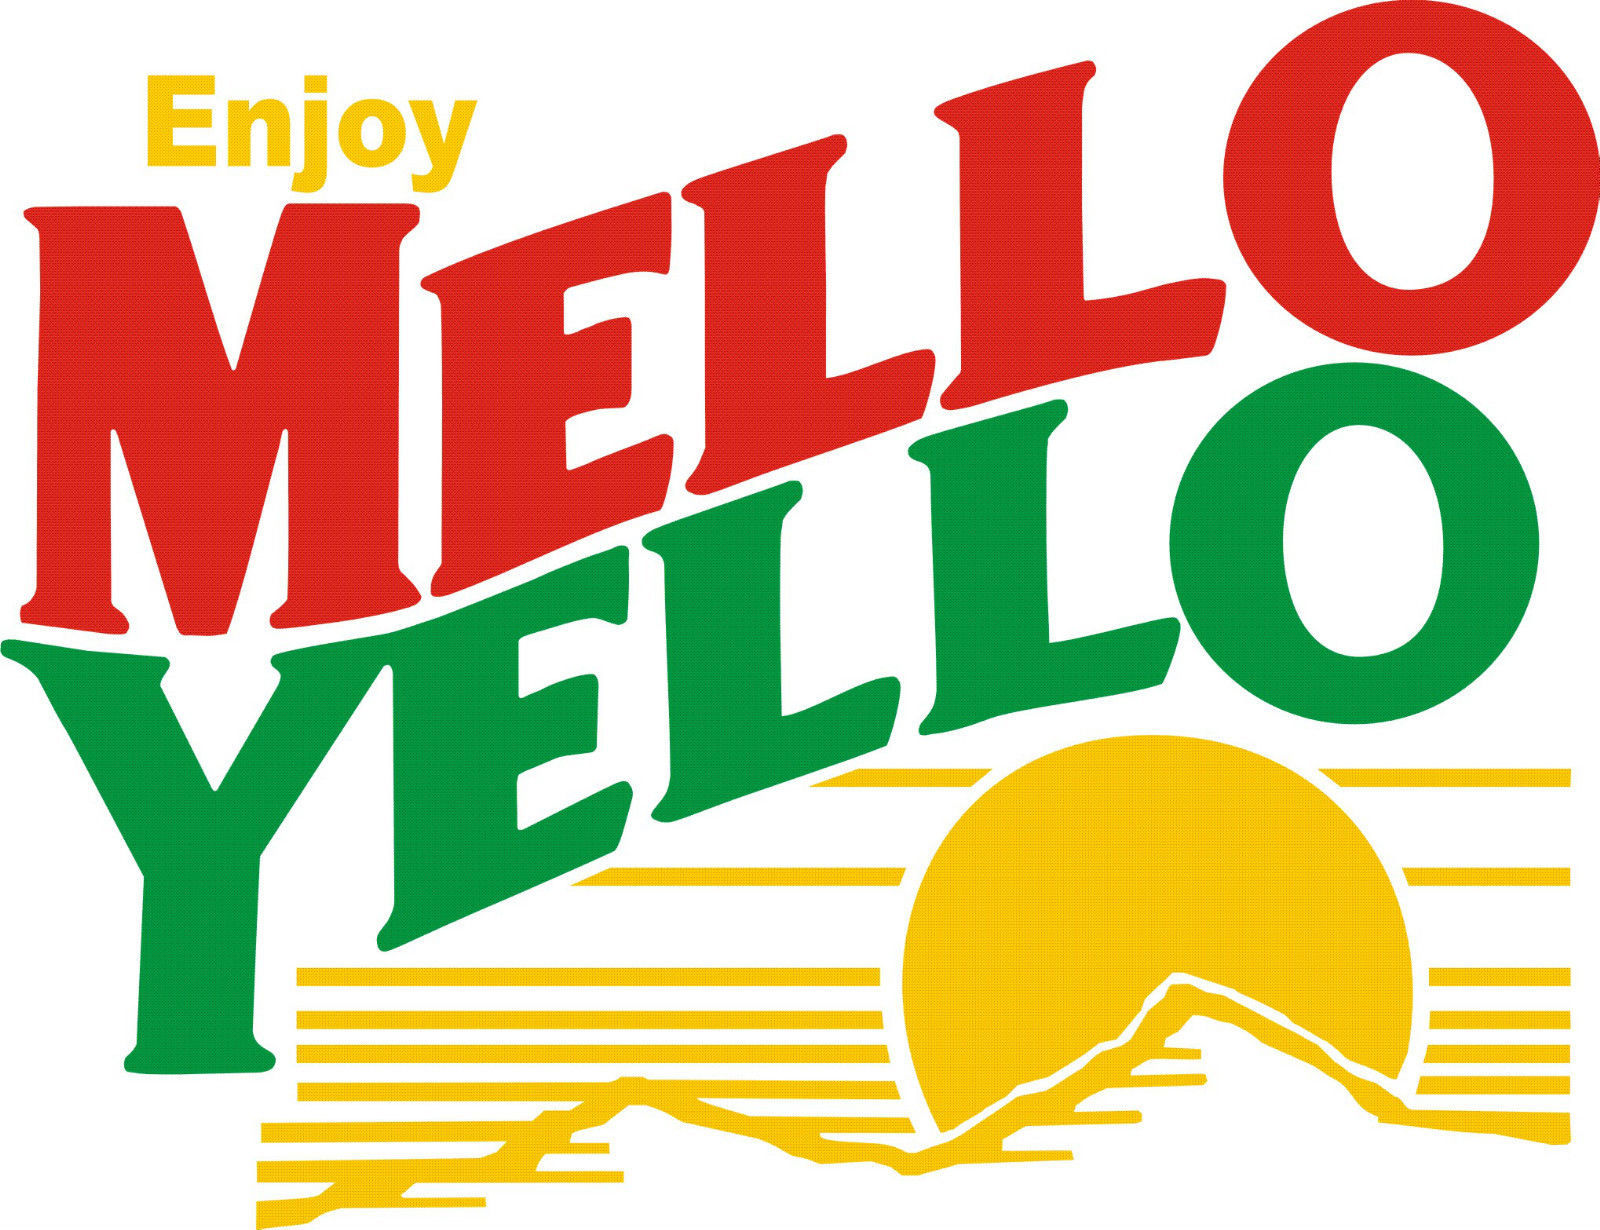 Mello Yello T shirt retro soda vintage logo 80's 100% cotton graphic ...